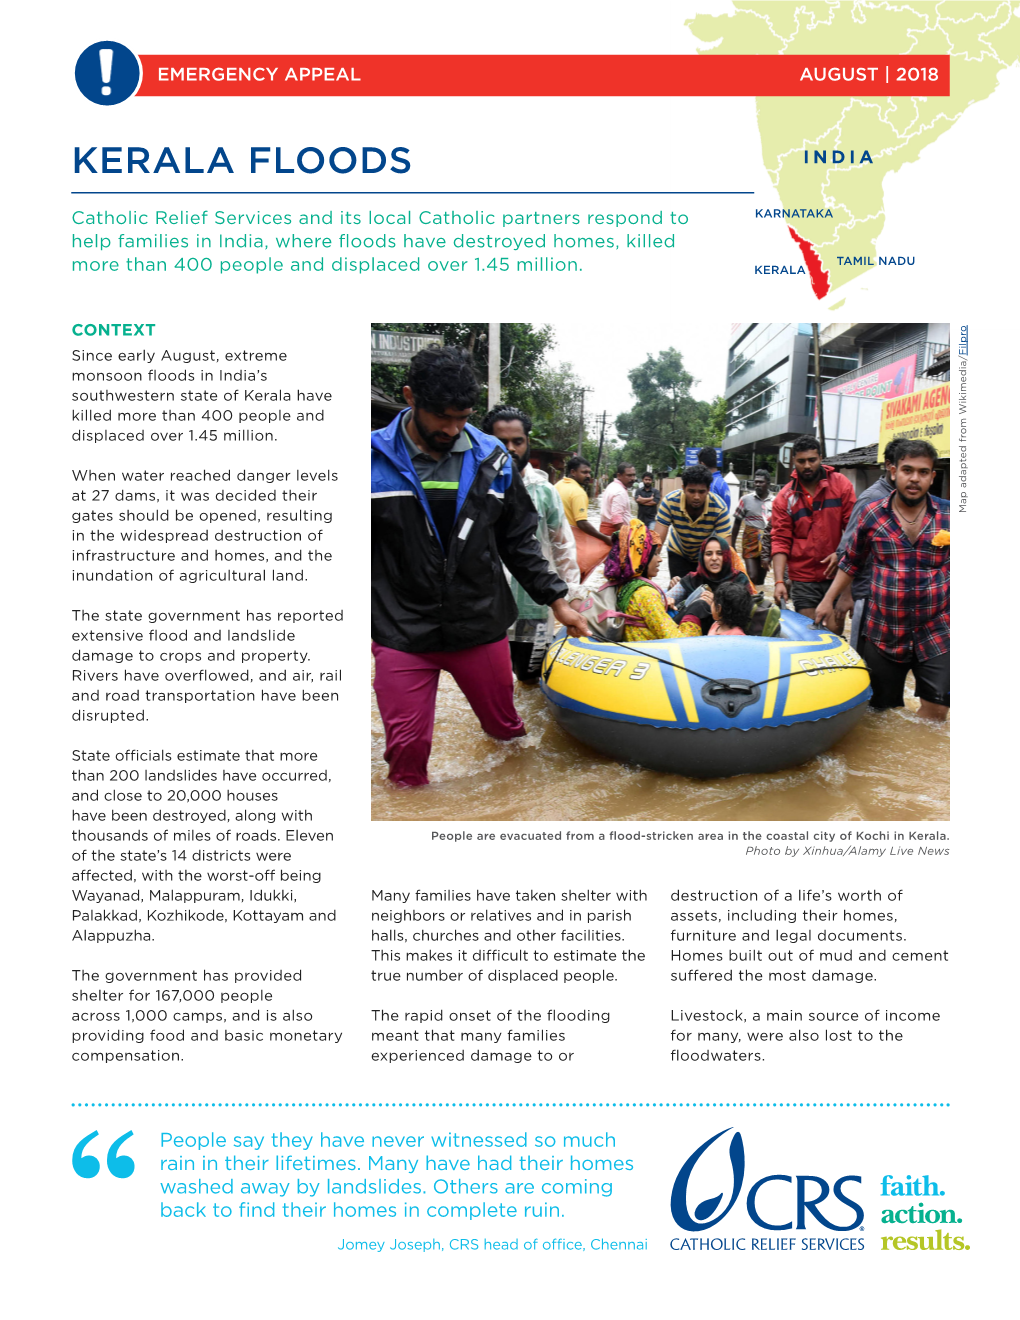 Kerala, India Flooding: Handout